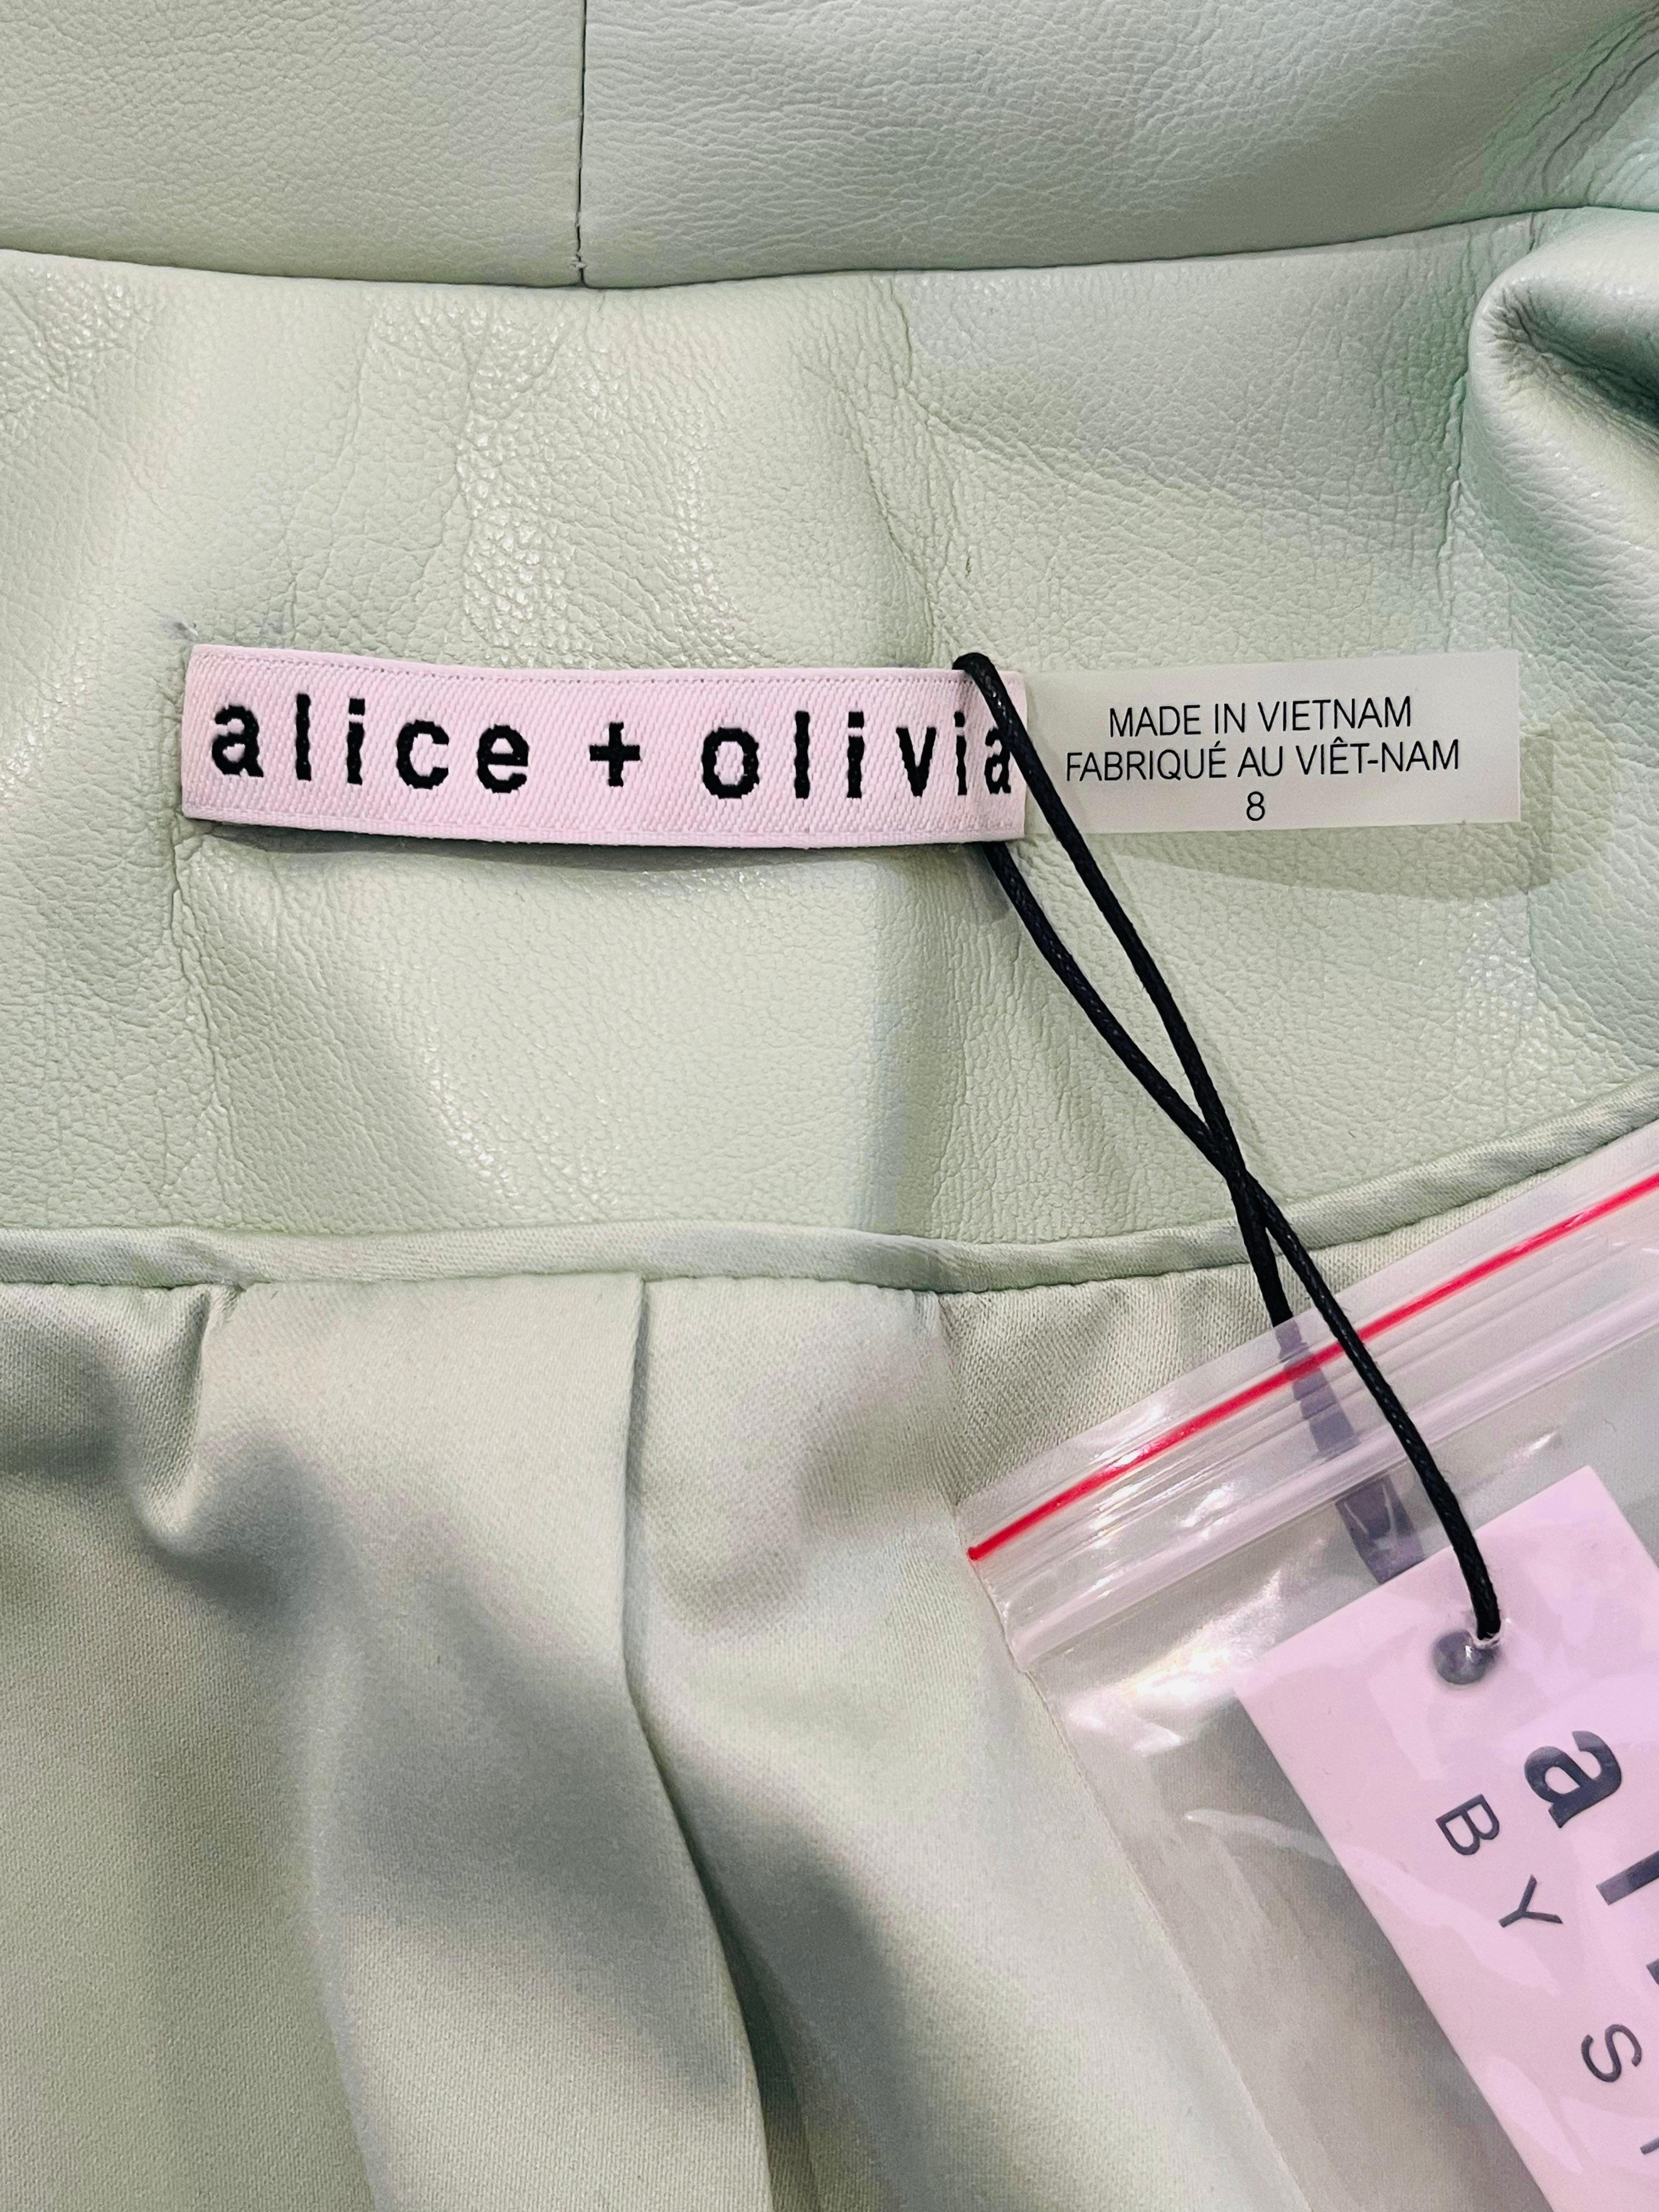 Alice + Olivia Vegan Leather Jacket For Sale 2